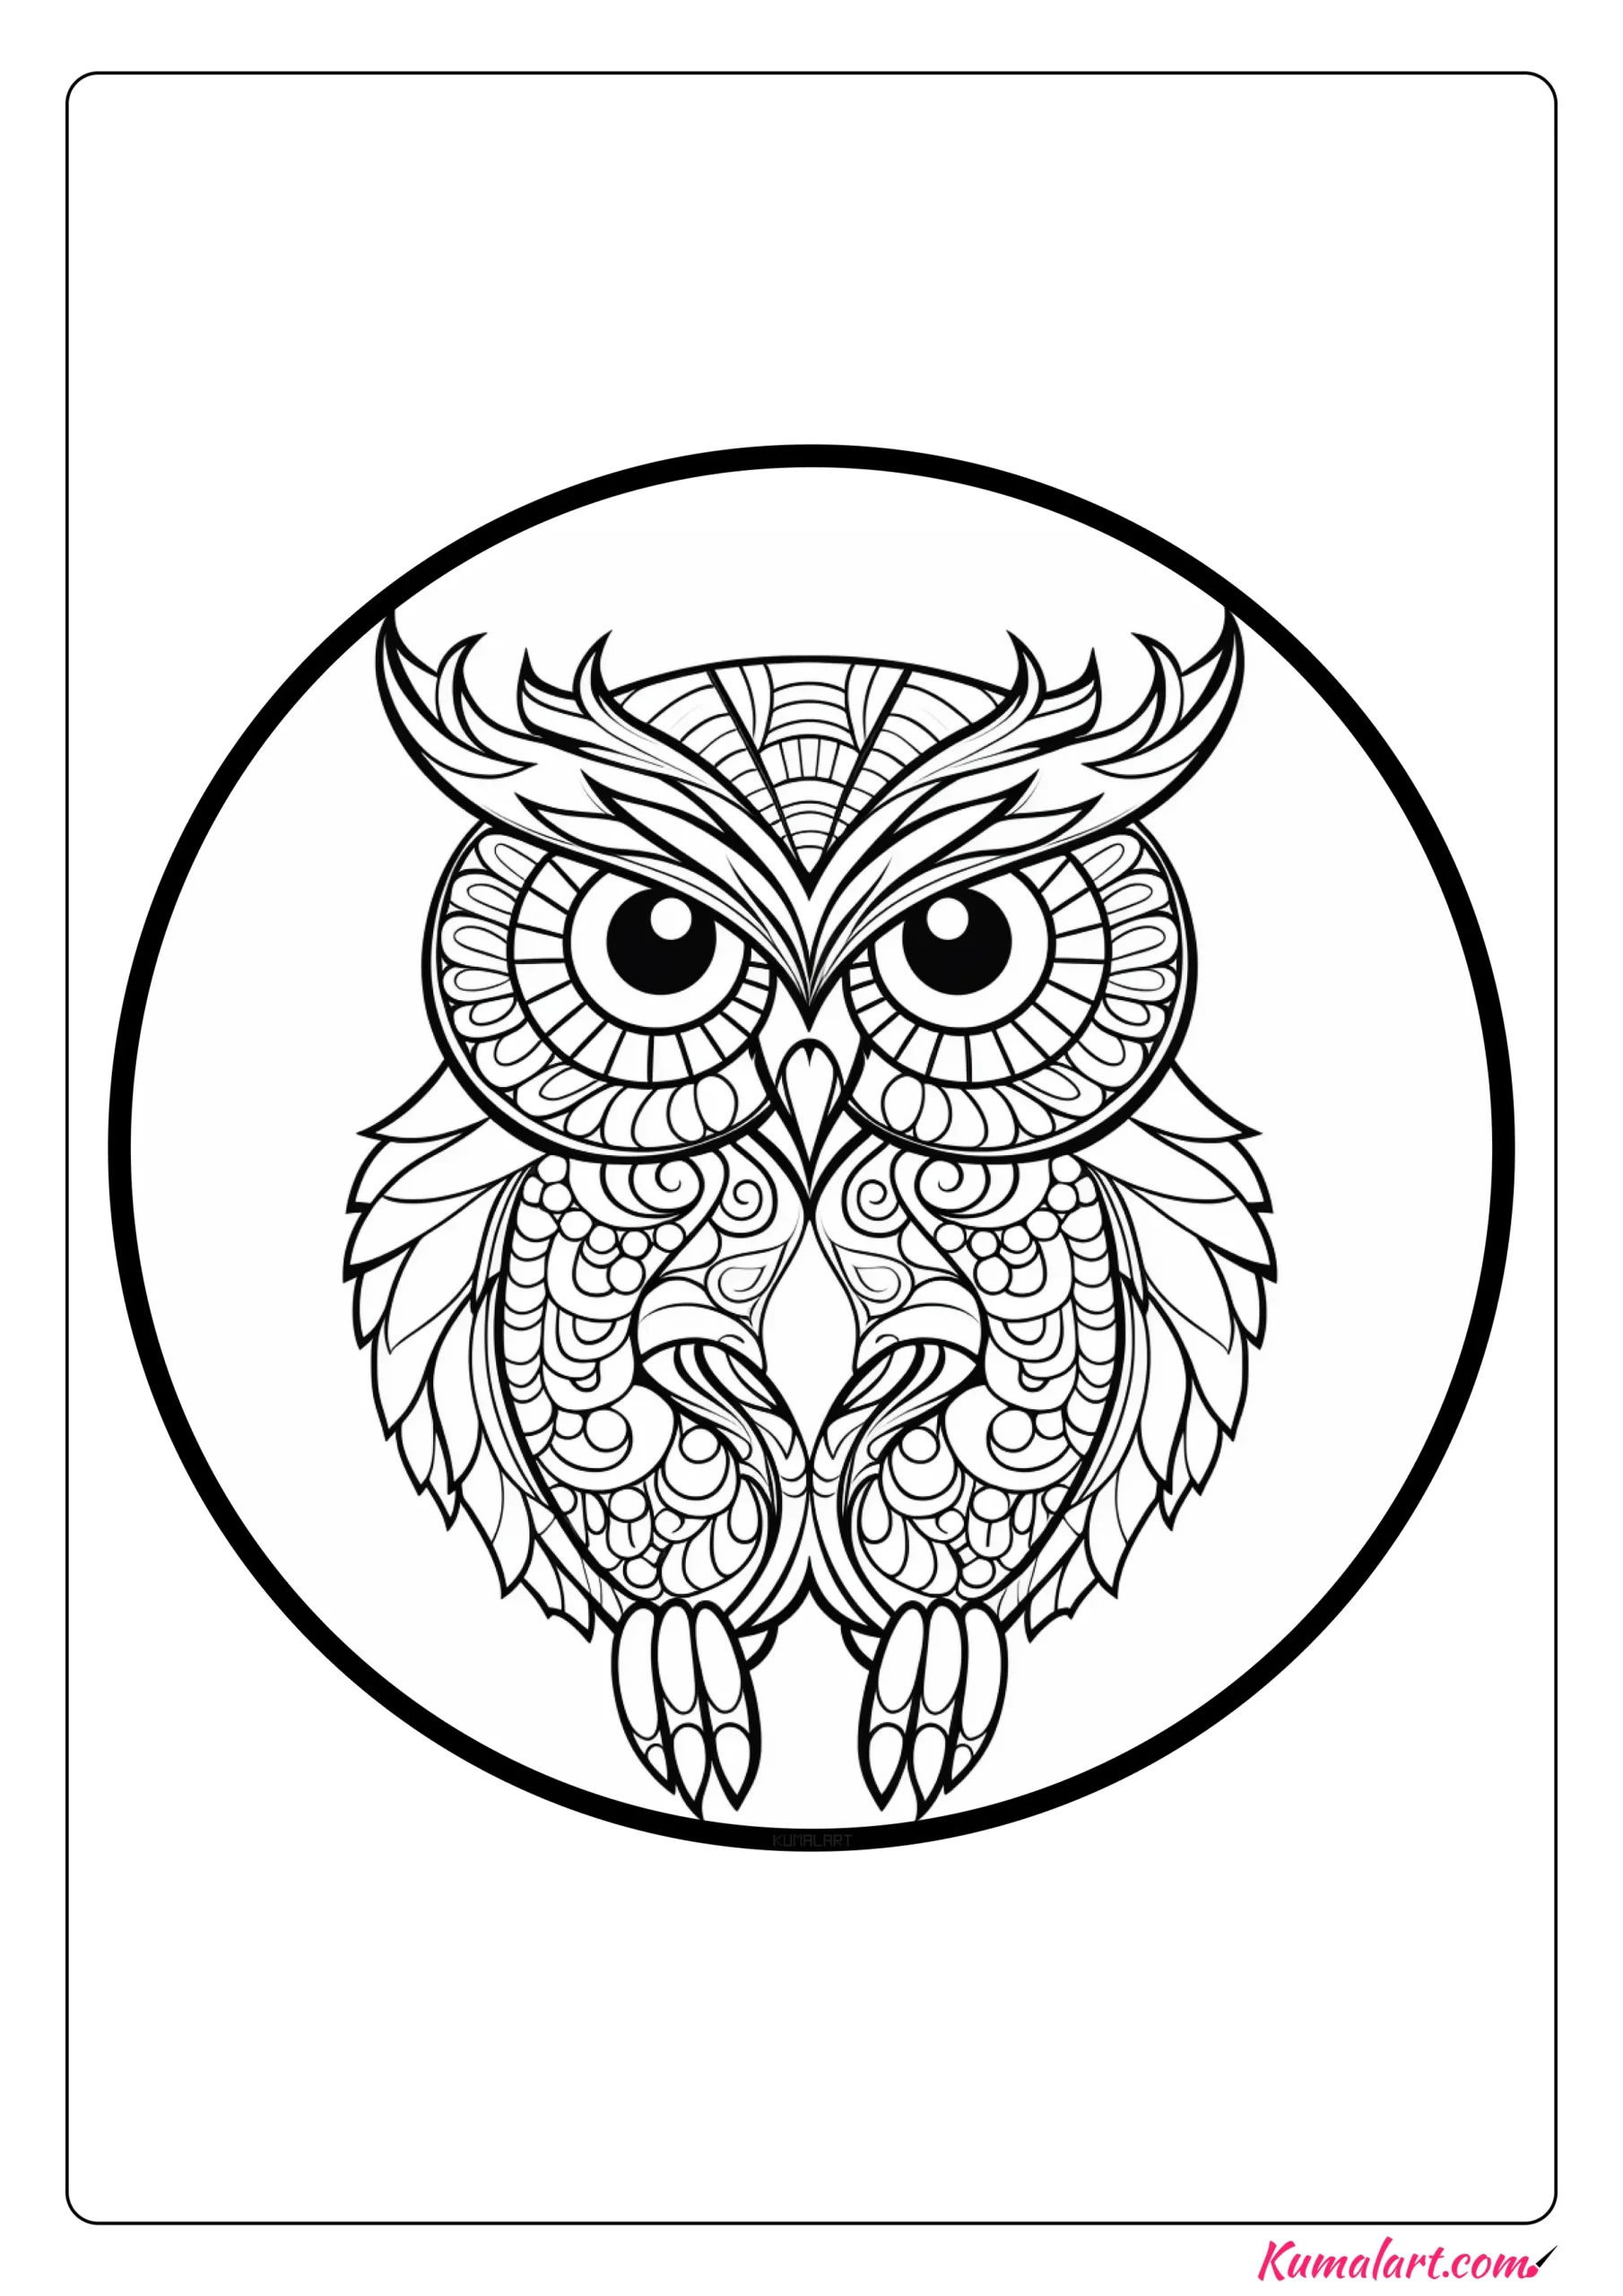 Alan the Owl Mandala Coloring Page